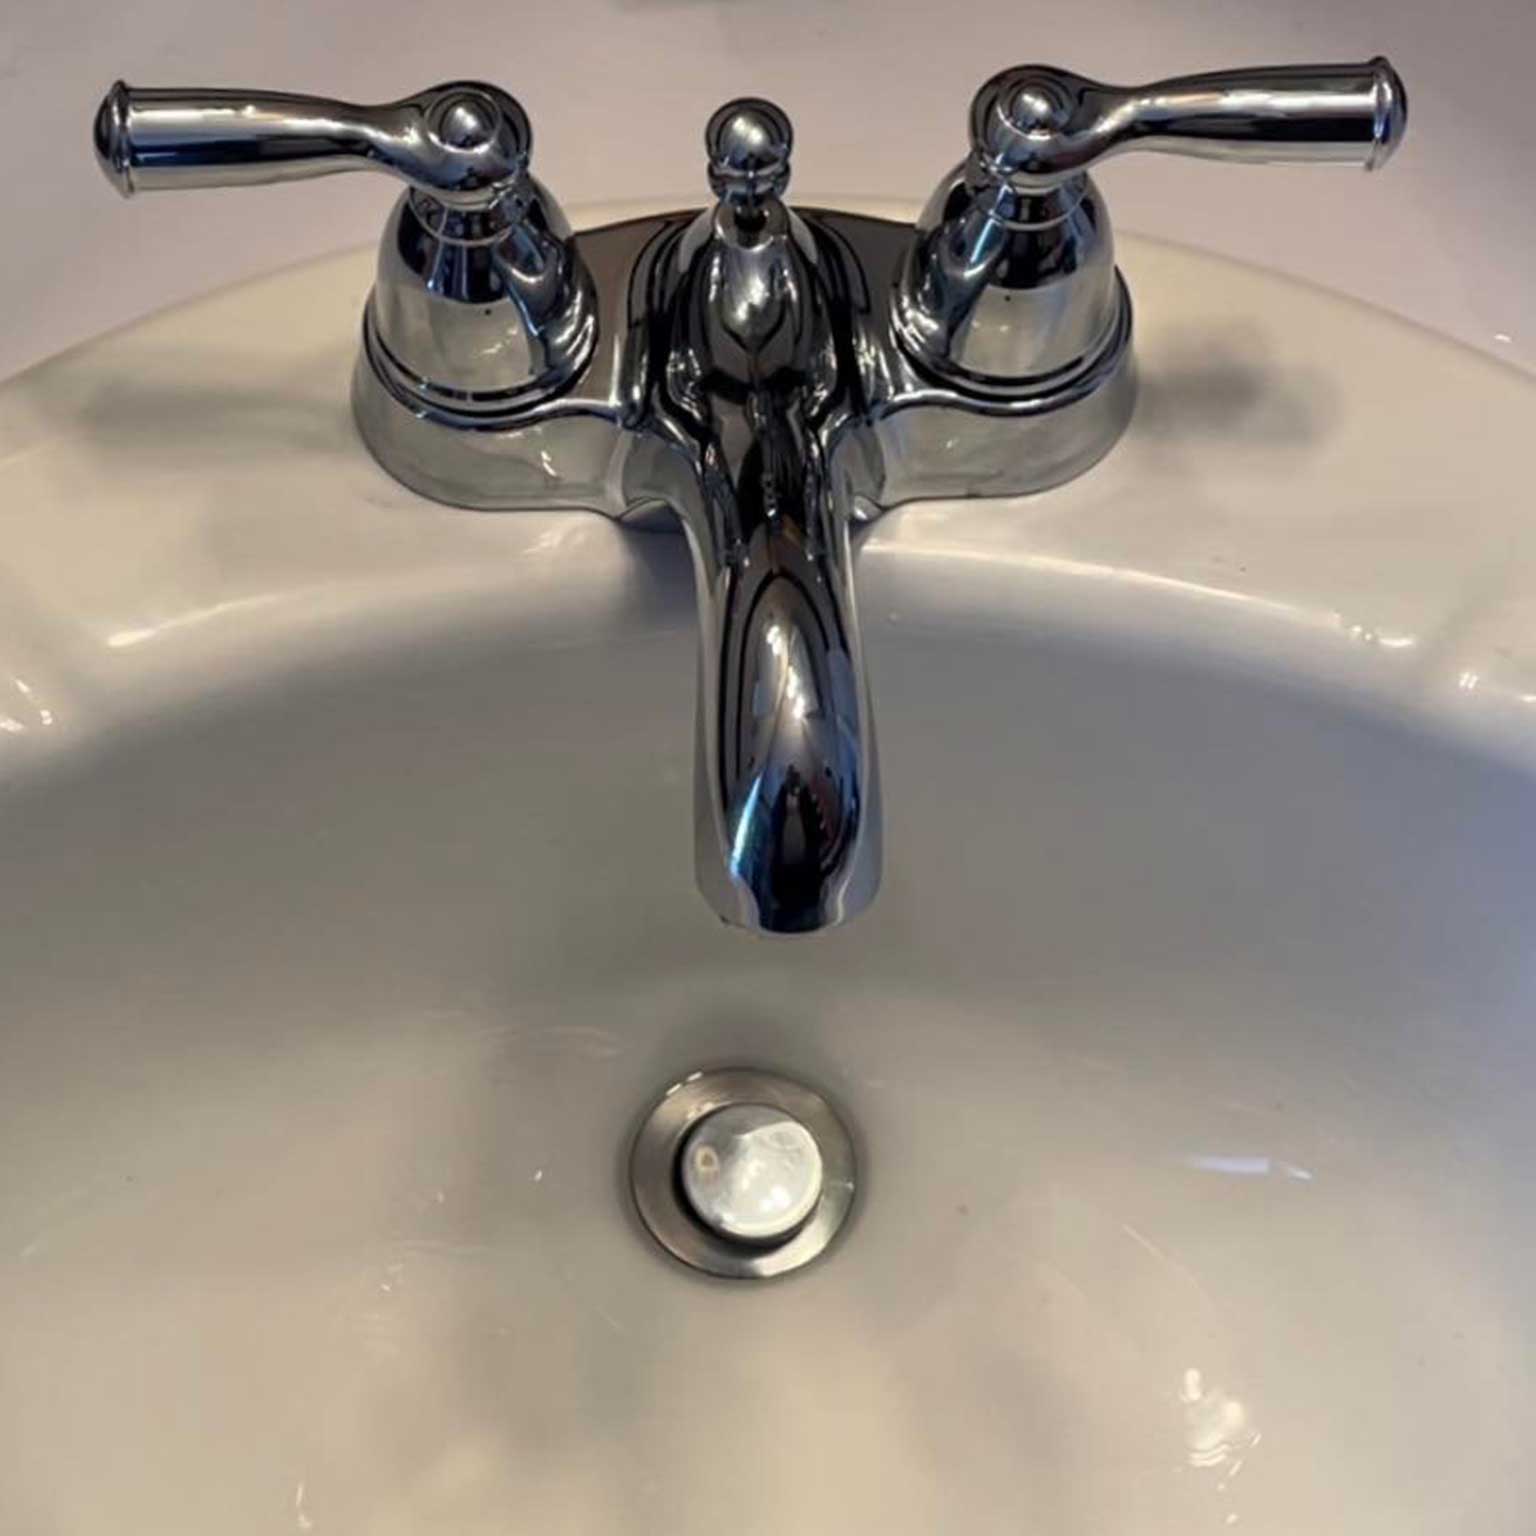 Faucet Replacement in Quincy